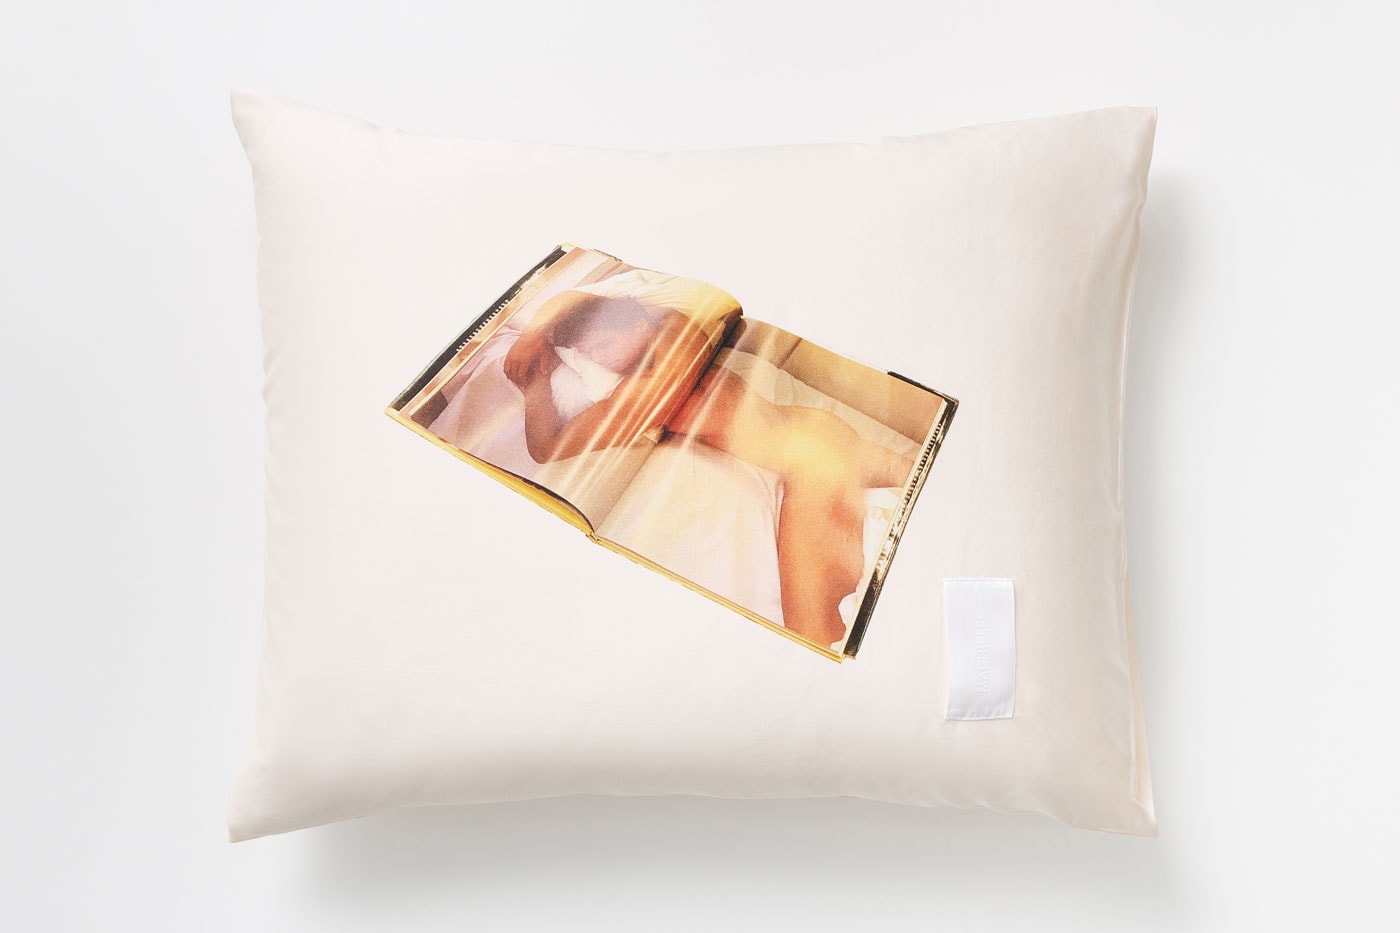 One Tribe Black Gold Lumbar Pillow